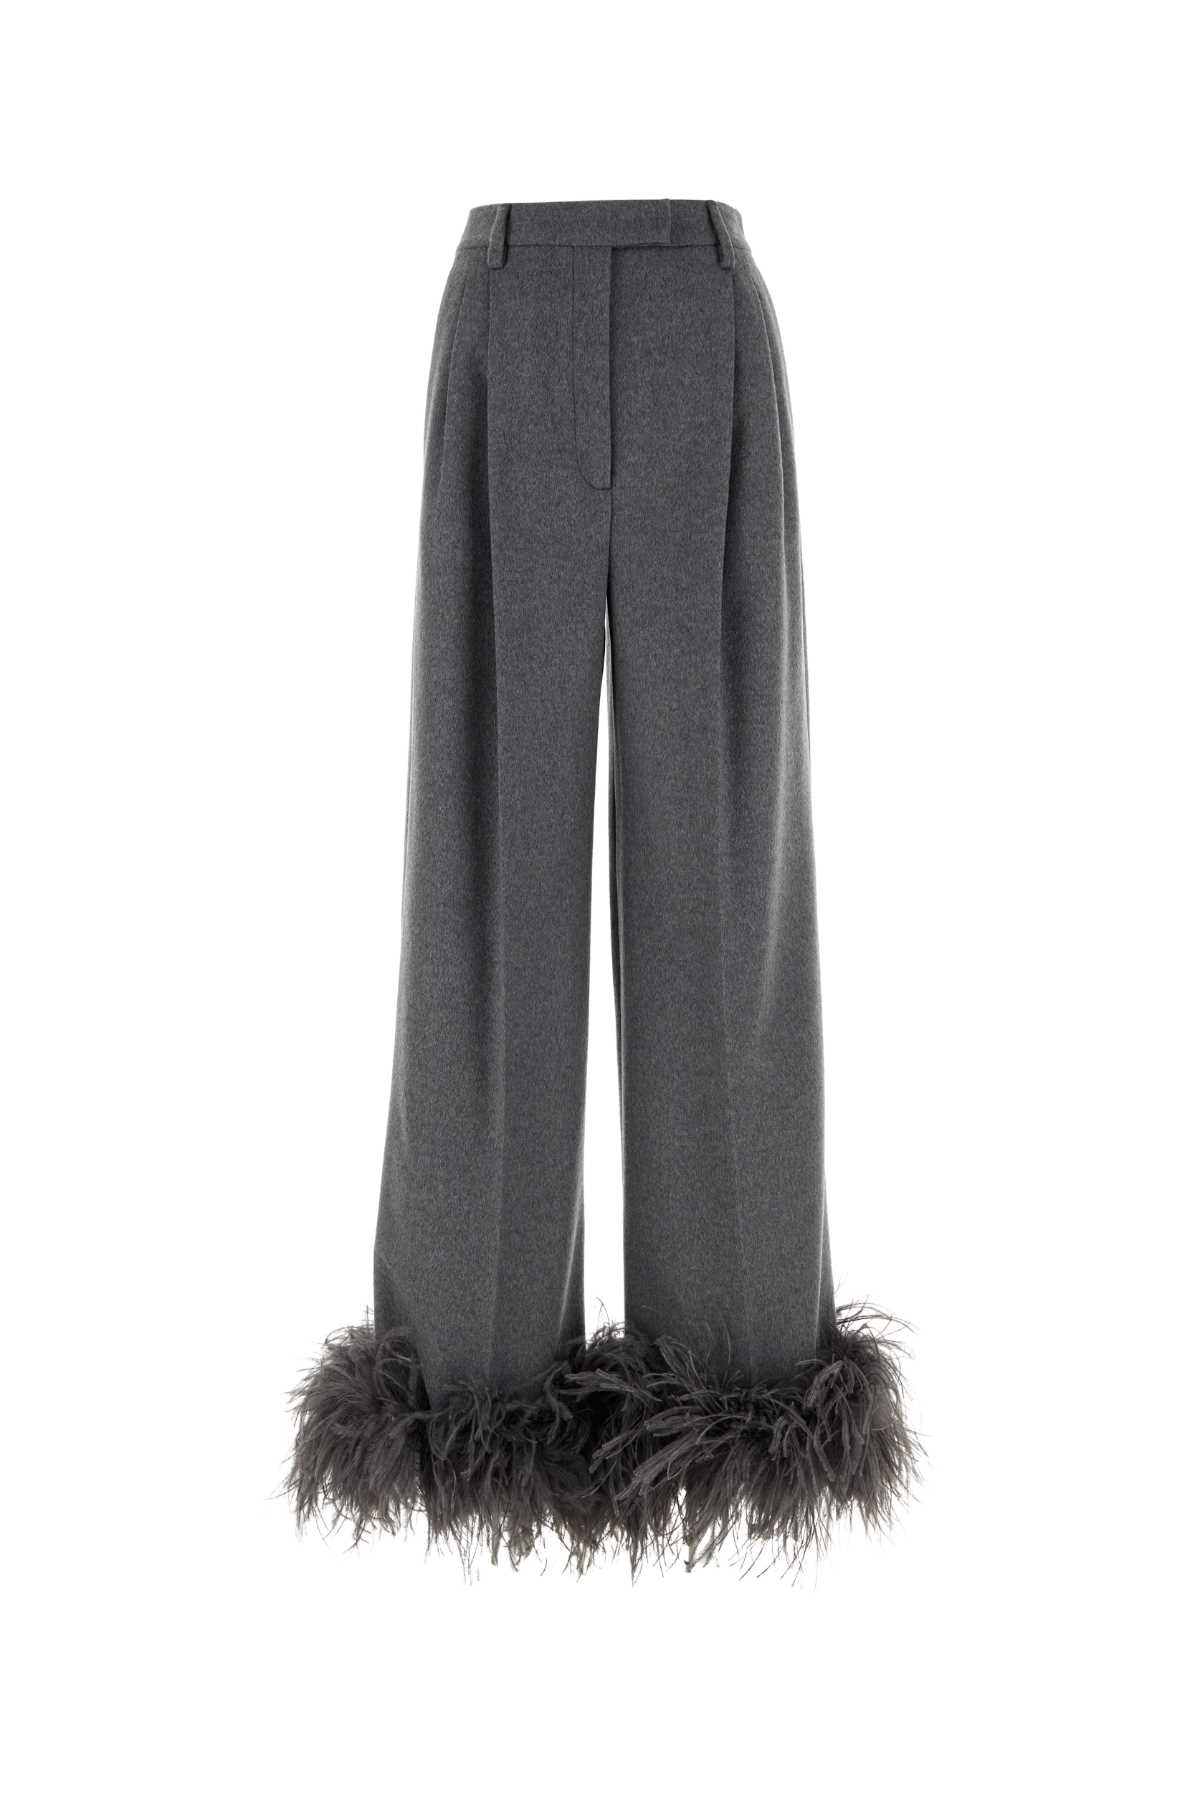 Prada Grey Cashmere Wide-leg Pant